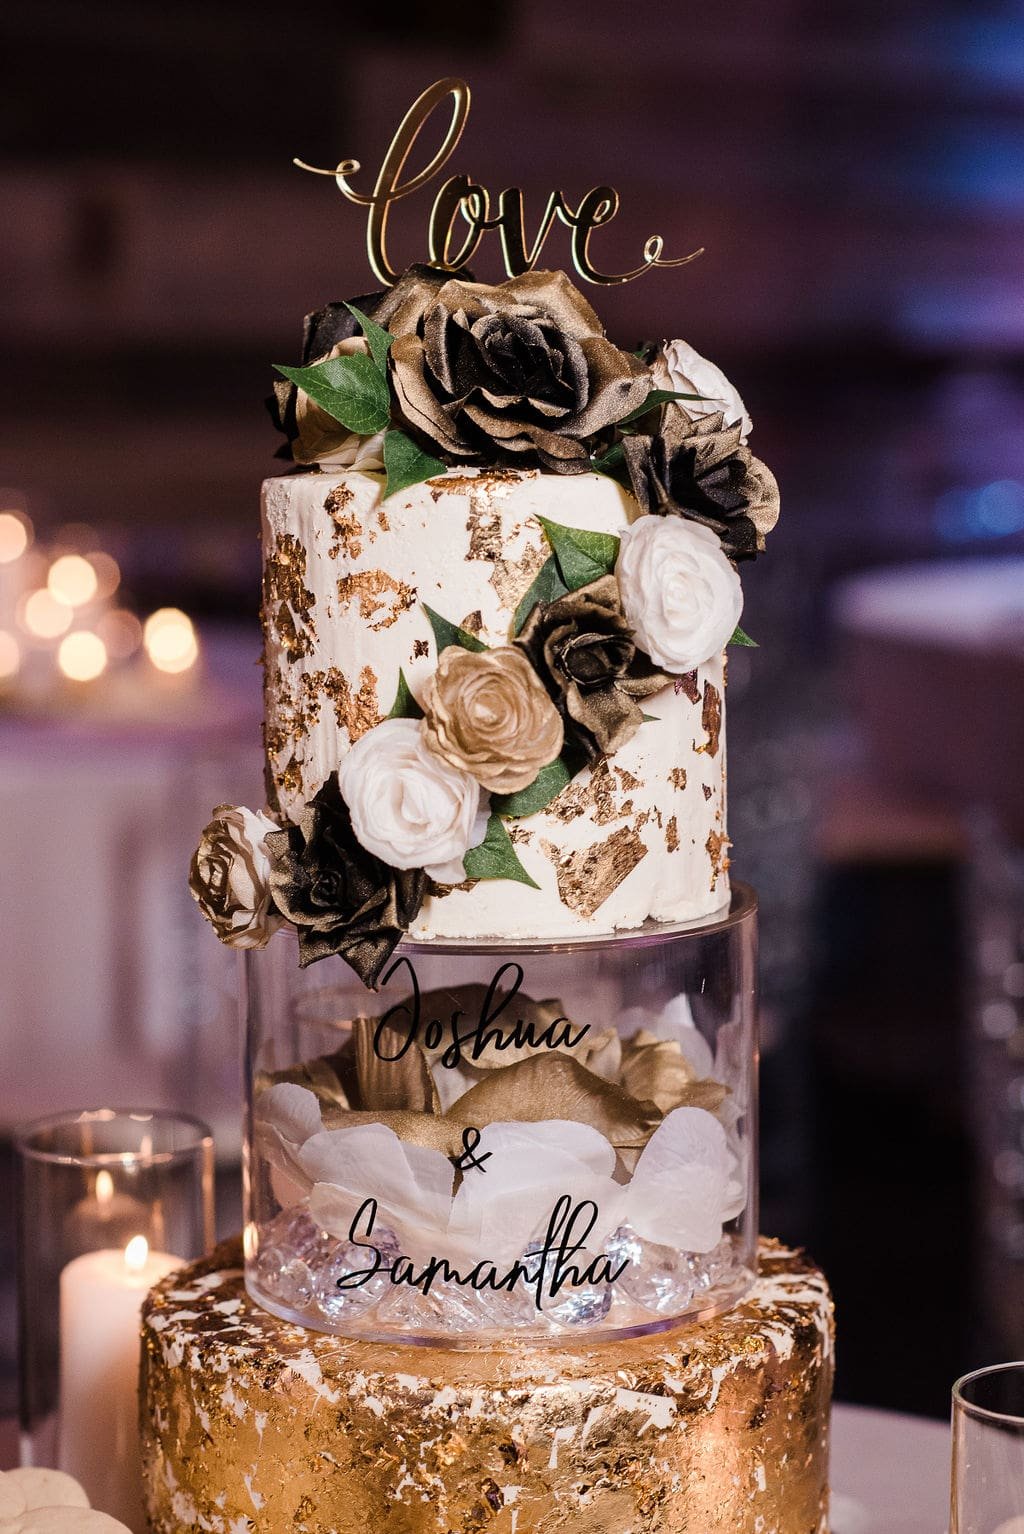 Three tiered gold and white wedding cake